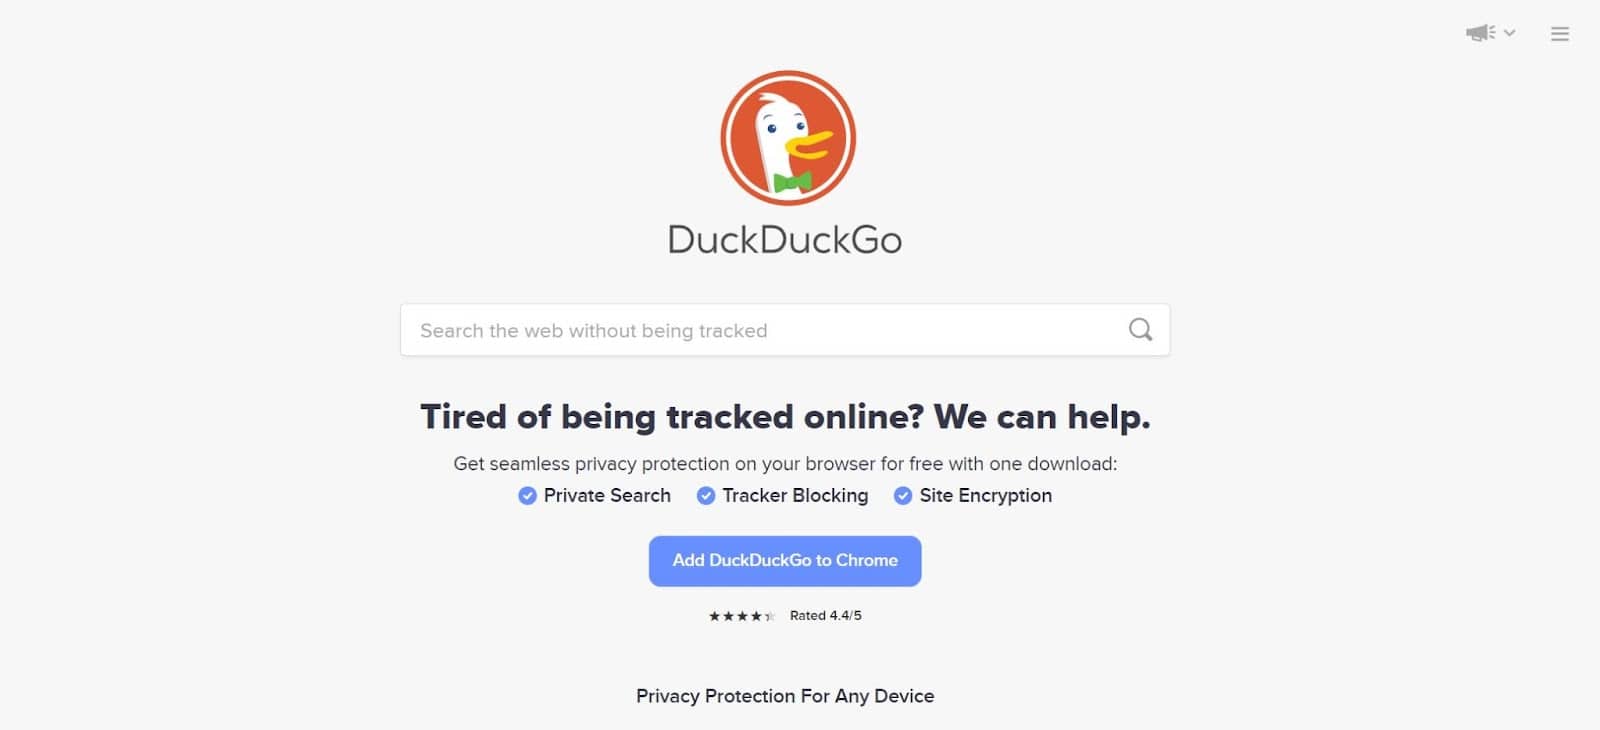 DuckDuckGo's search engine 